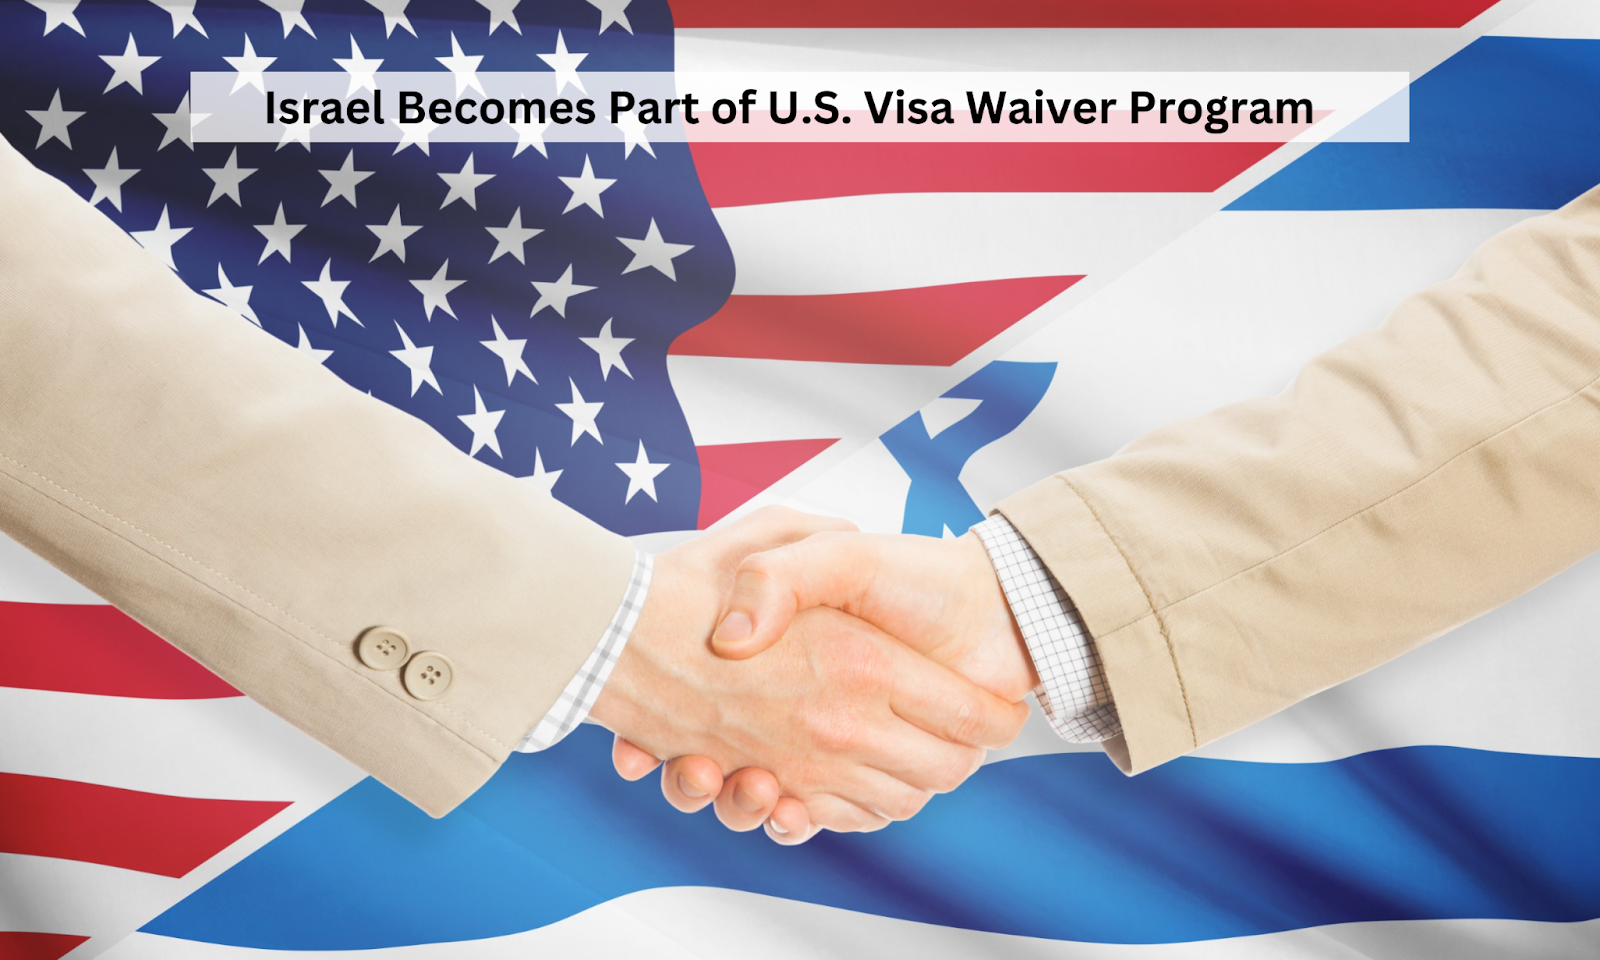 Israel Becomes Part of U.S. Visa Waiver Program